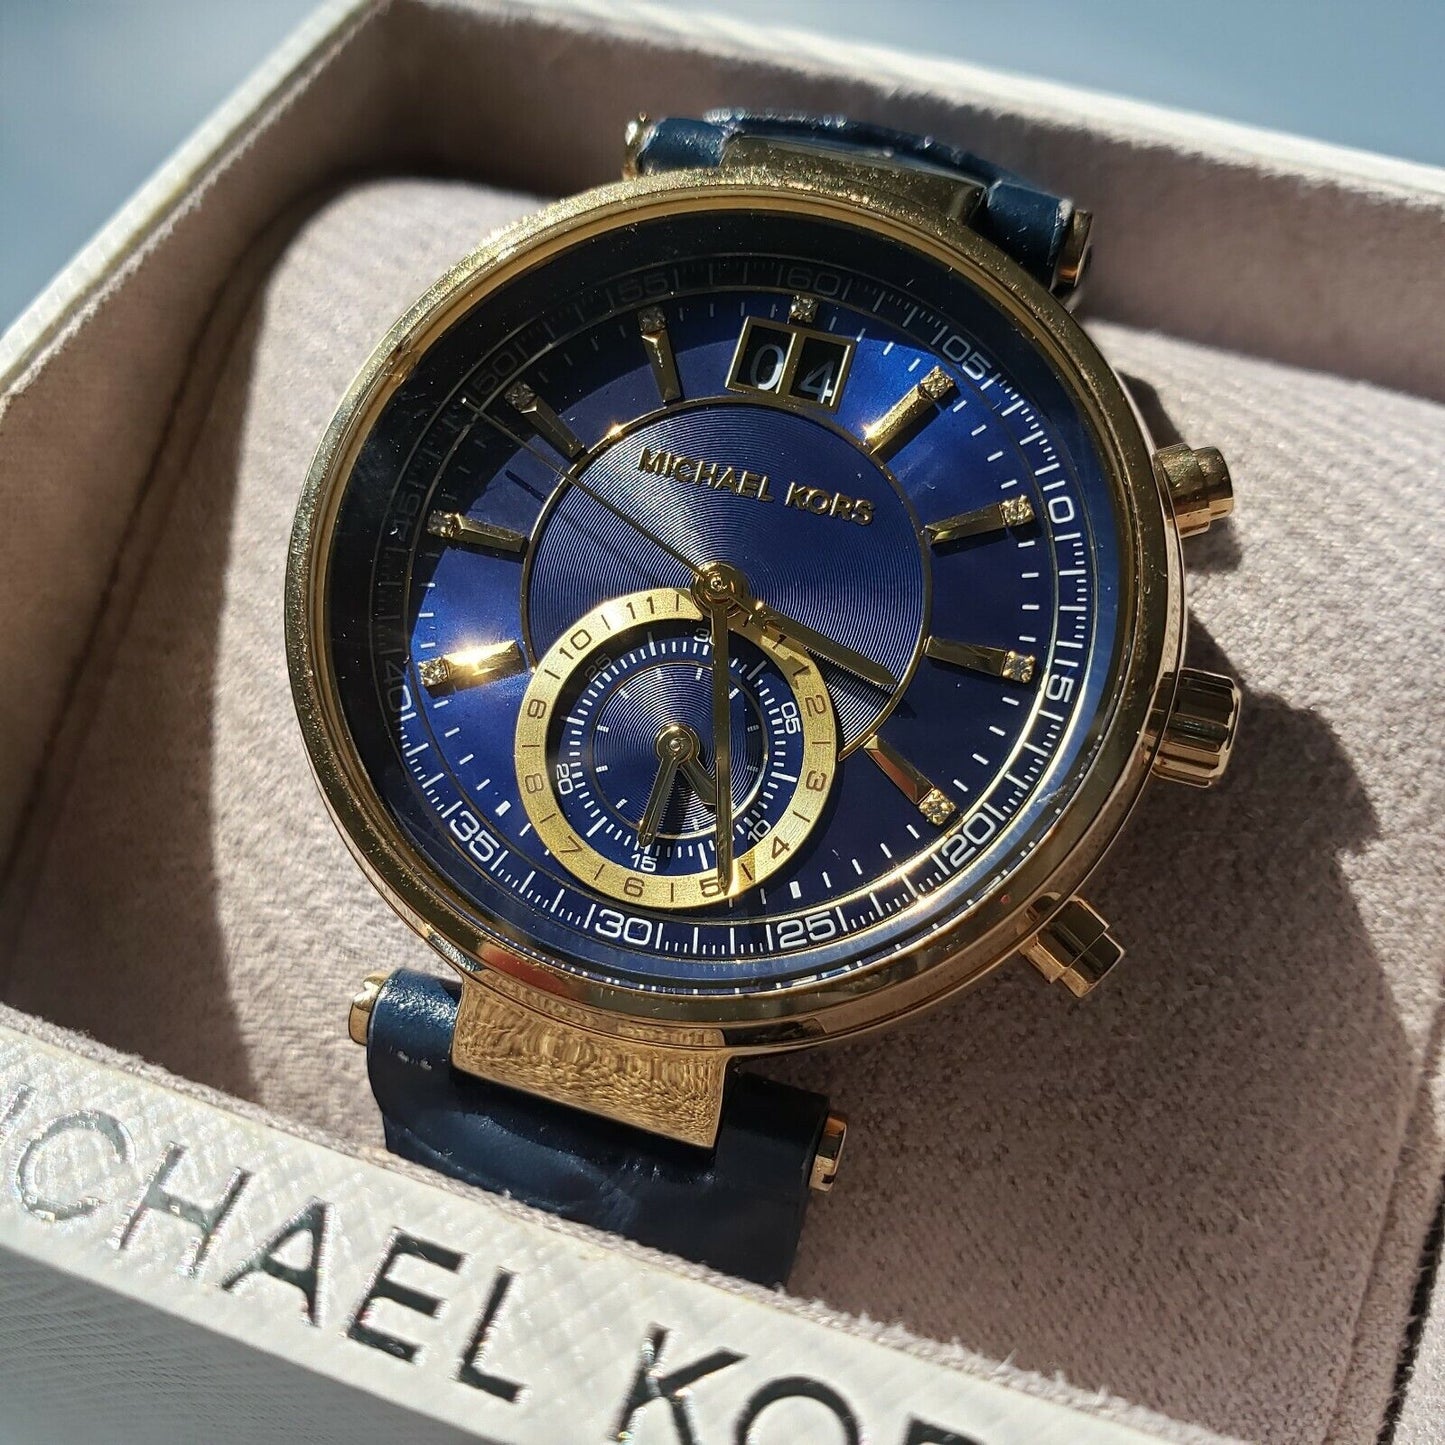 Michael Kors Sawyer Blue Dial Blue Leather Strap Watch for Women - MK2425